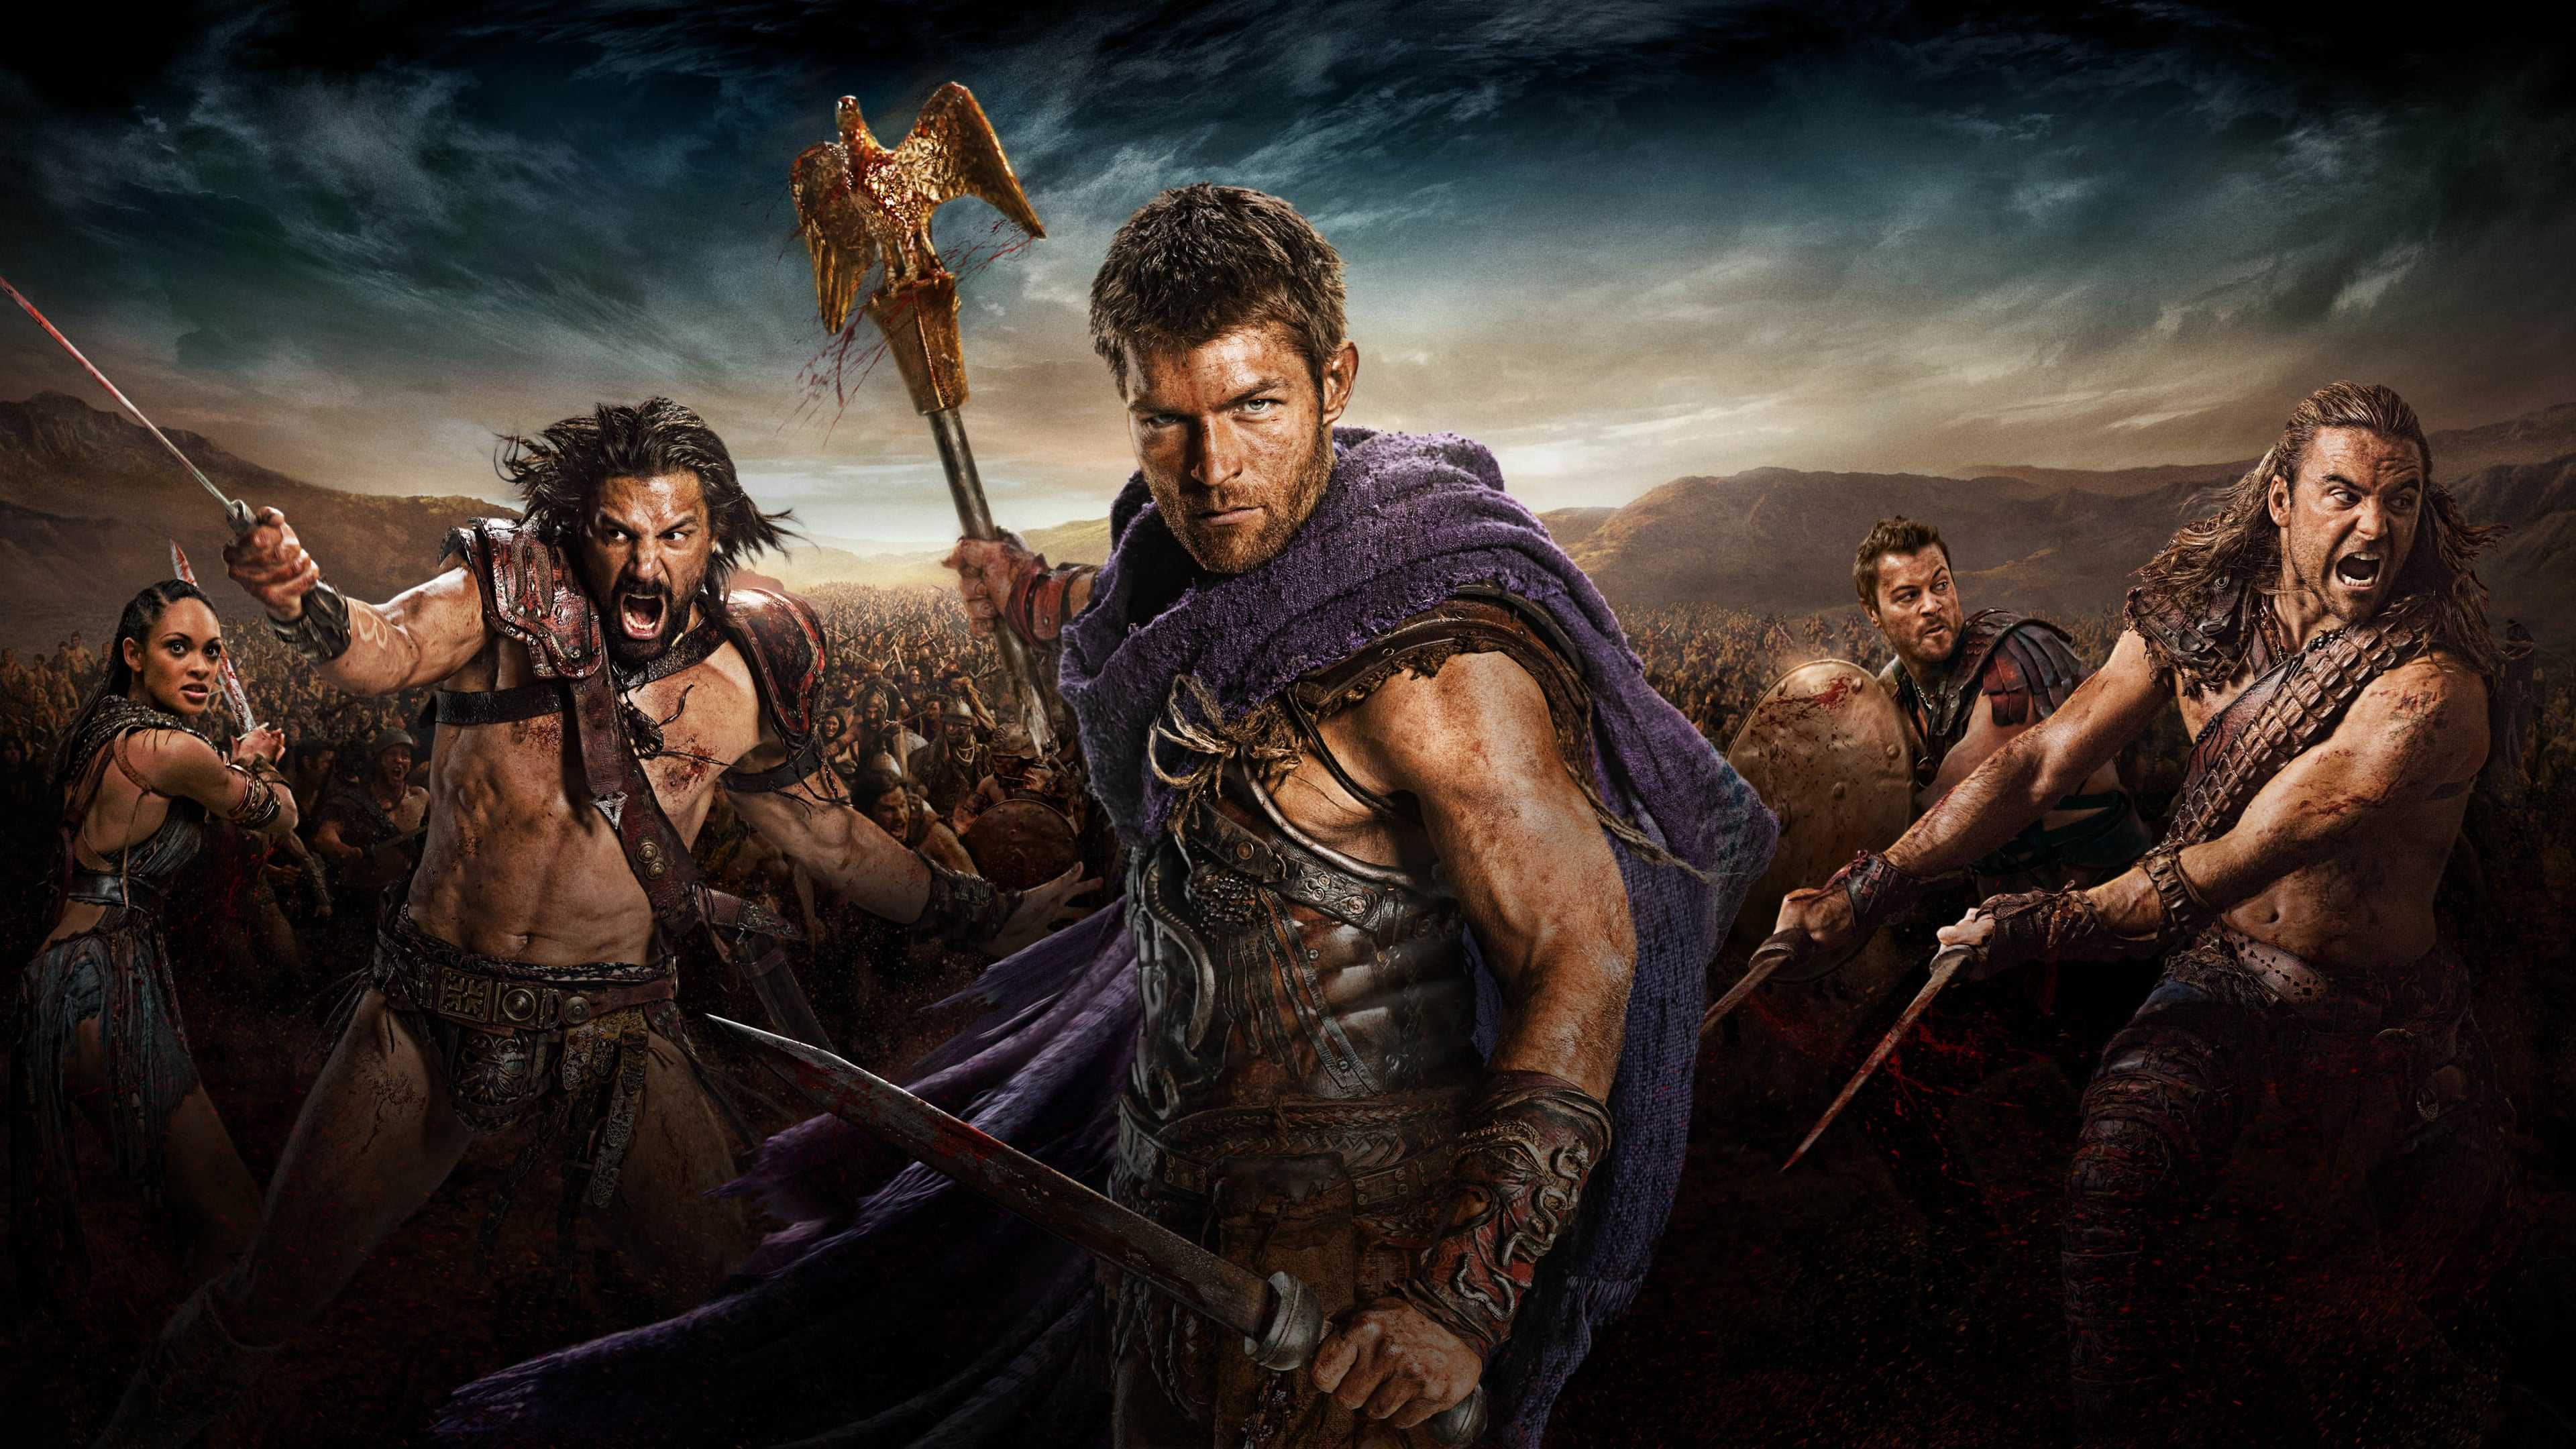 Spartacus: Chúa Tể Đấu Trường - Spartacus: Gods of the Arena